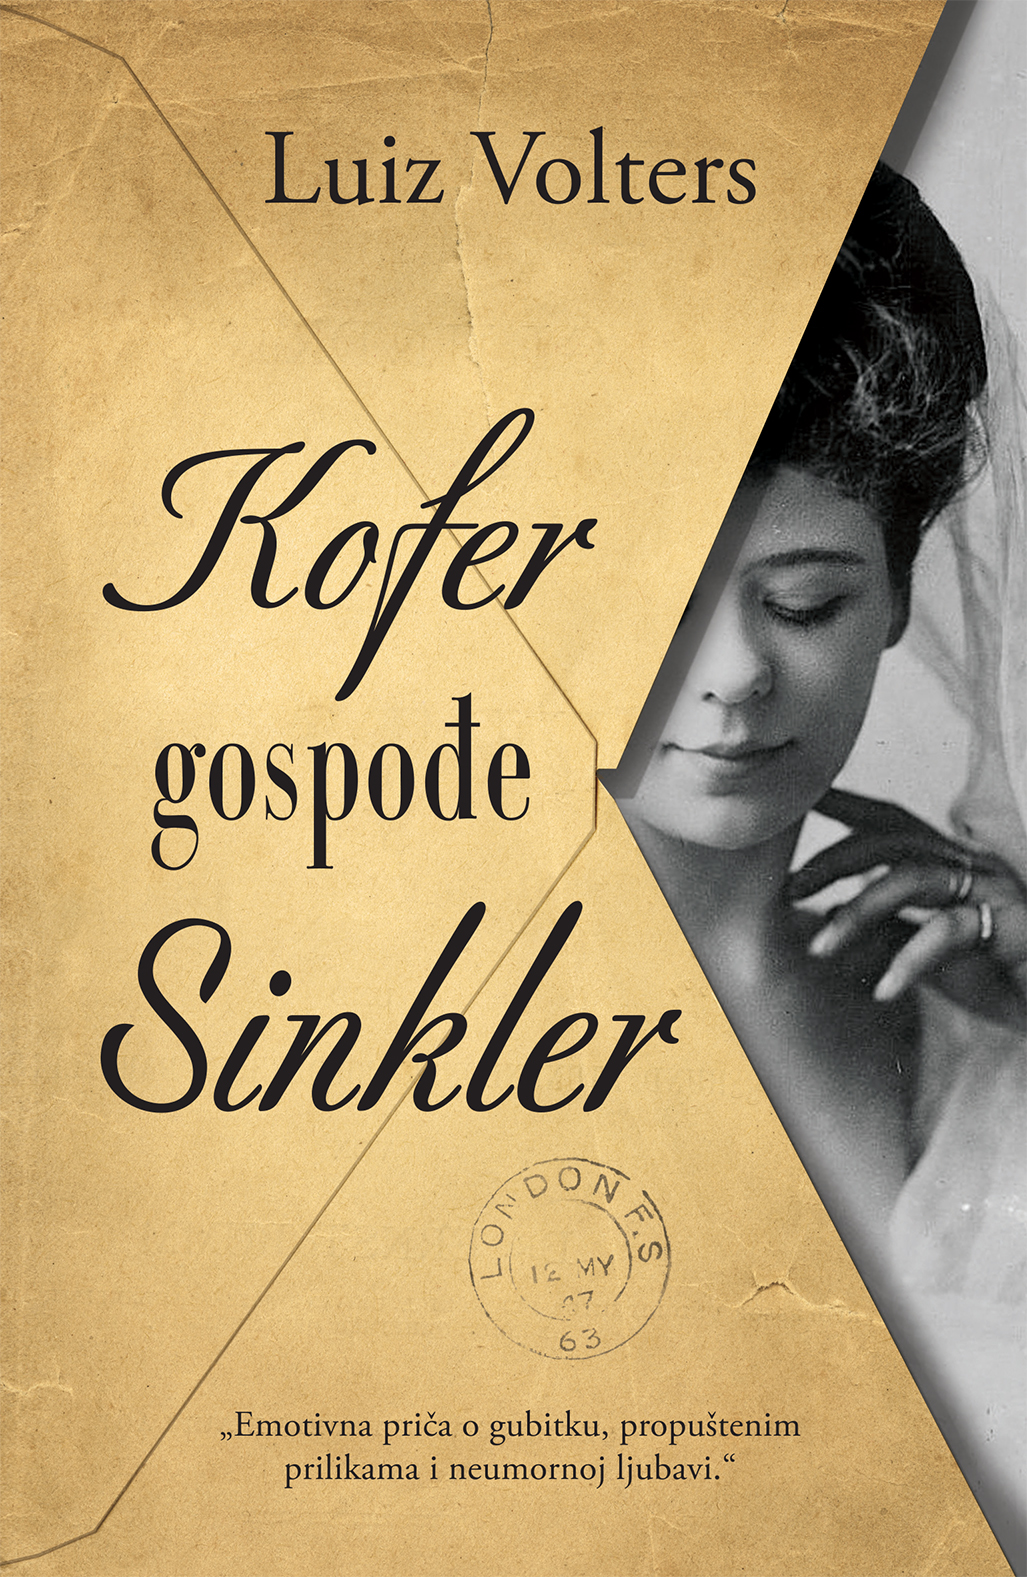 Kofer gospođe Sinkler by Luiz Volters